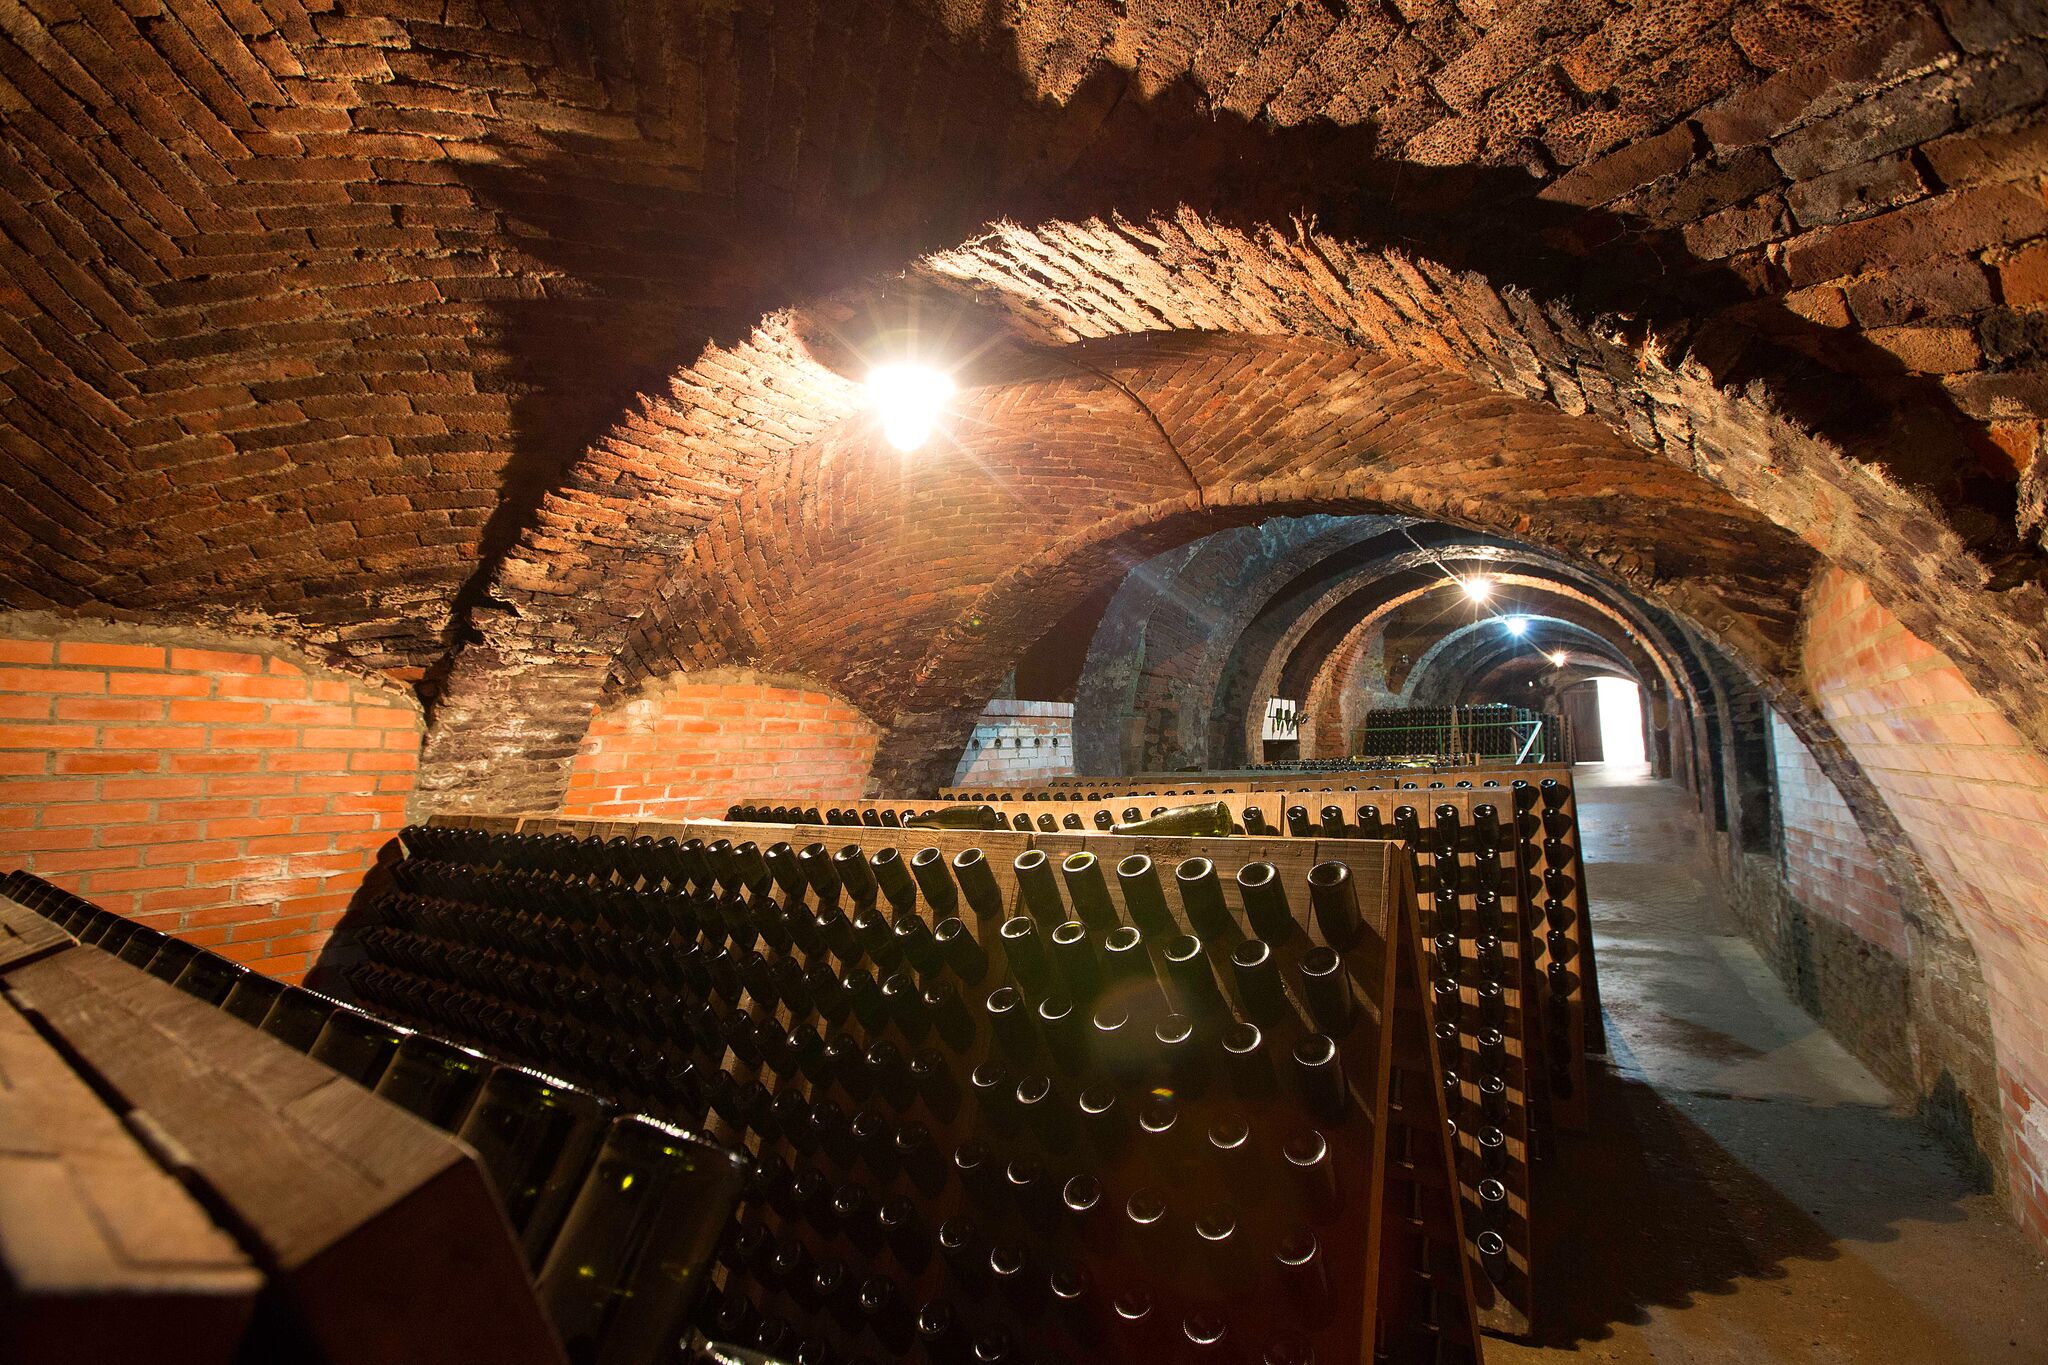 Radgonske gorice wine cellar